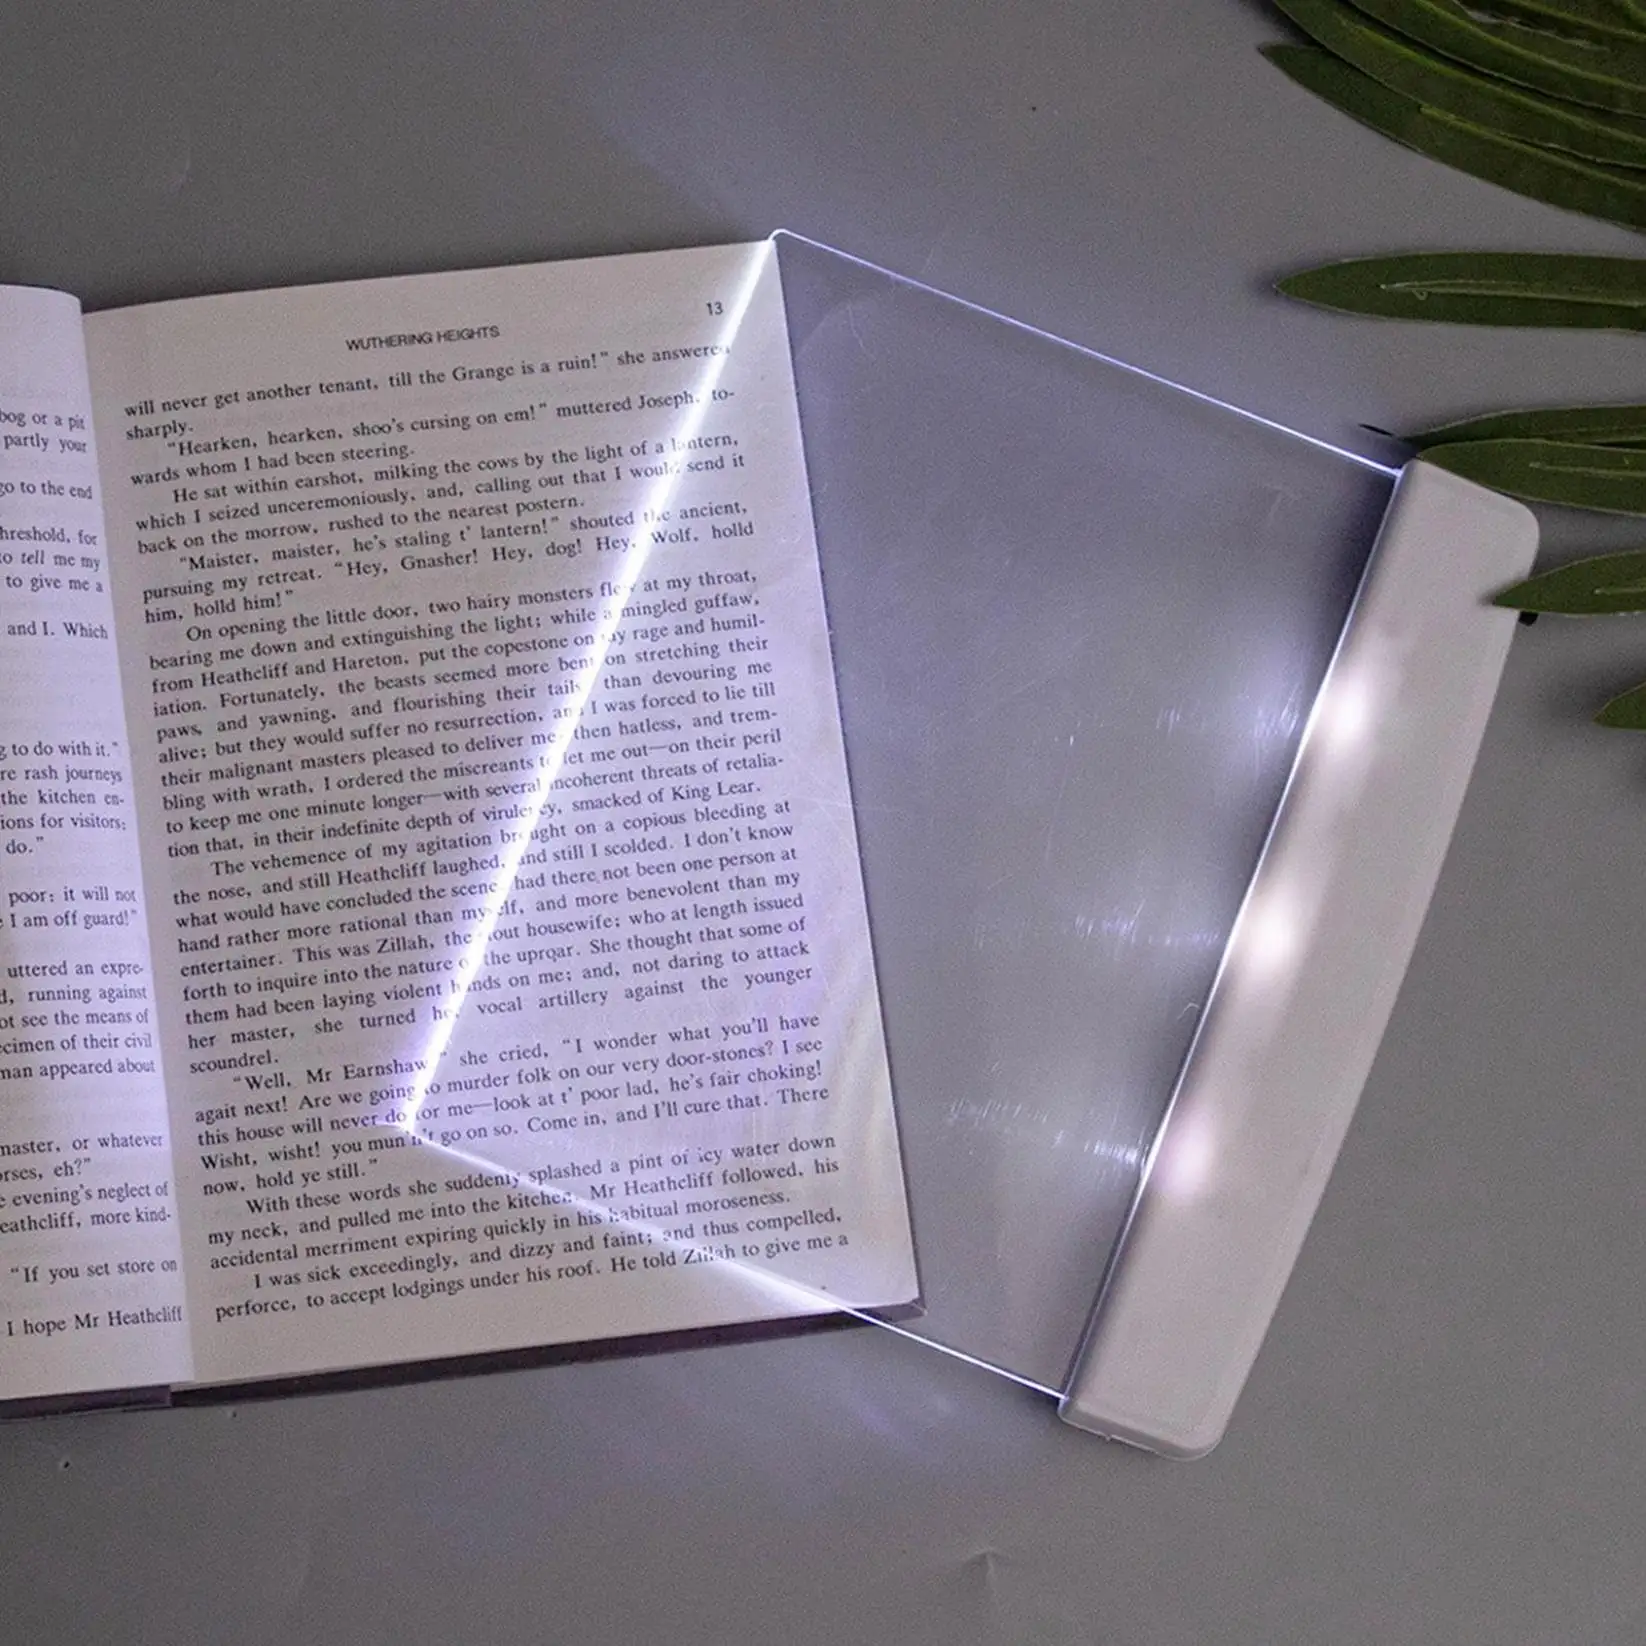 Lampu buku datar rumah untuk membaca di malam hari LED bening halaman buku lampu datar untuk membaca di tempat tidur malam hari